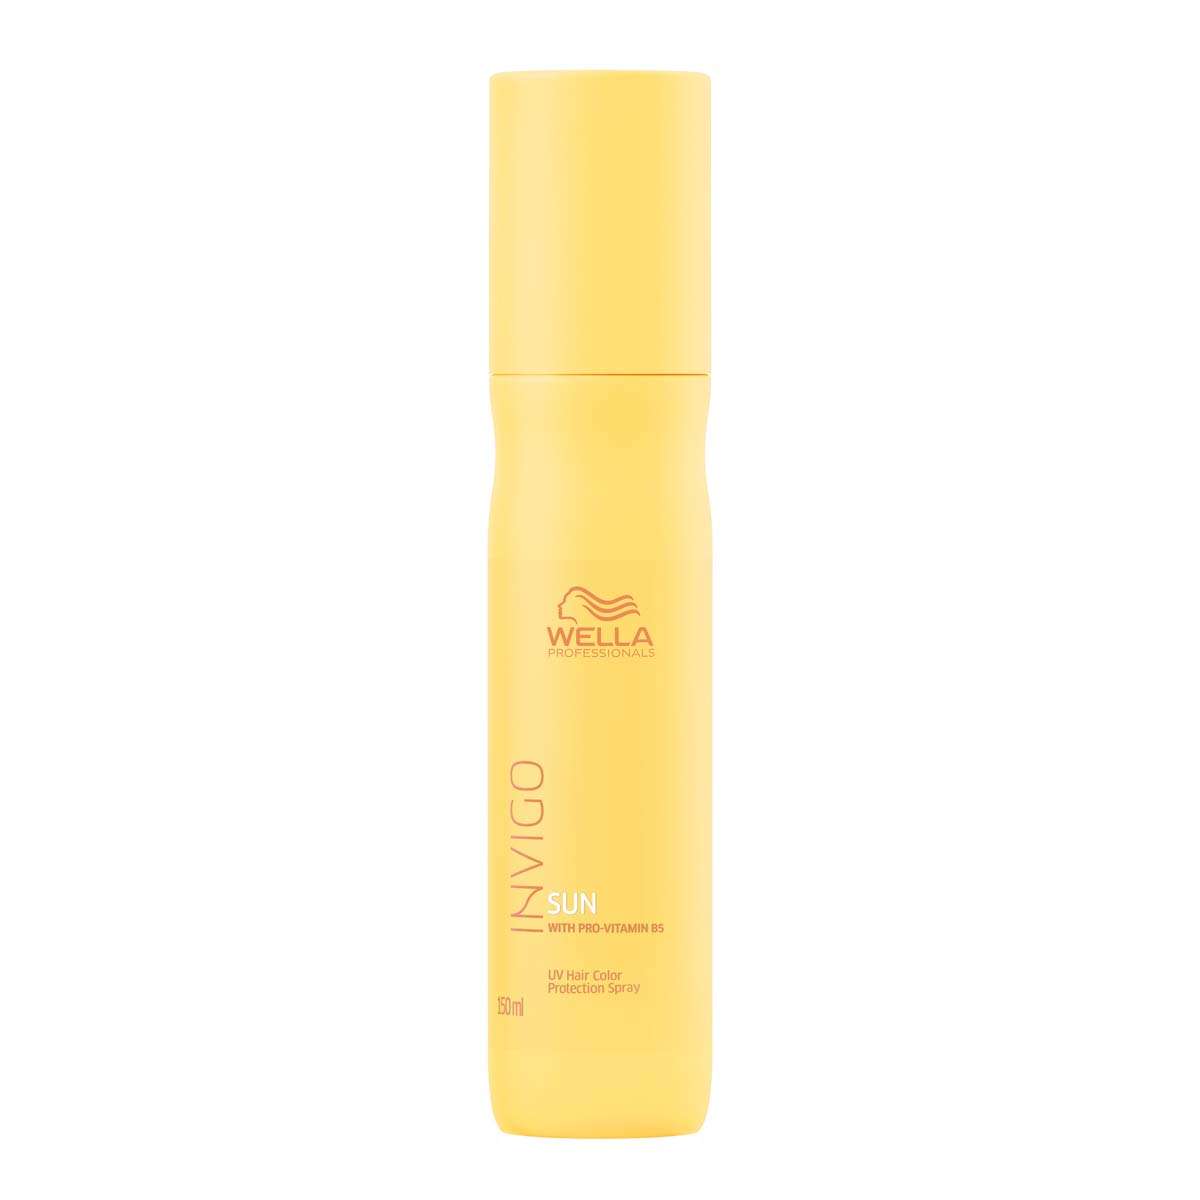 Wella Professionals Invigo Sun Uv Hair Color Protection Spray 150Ml